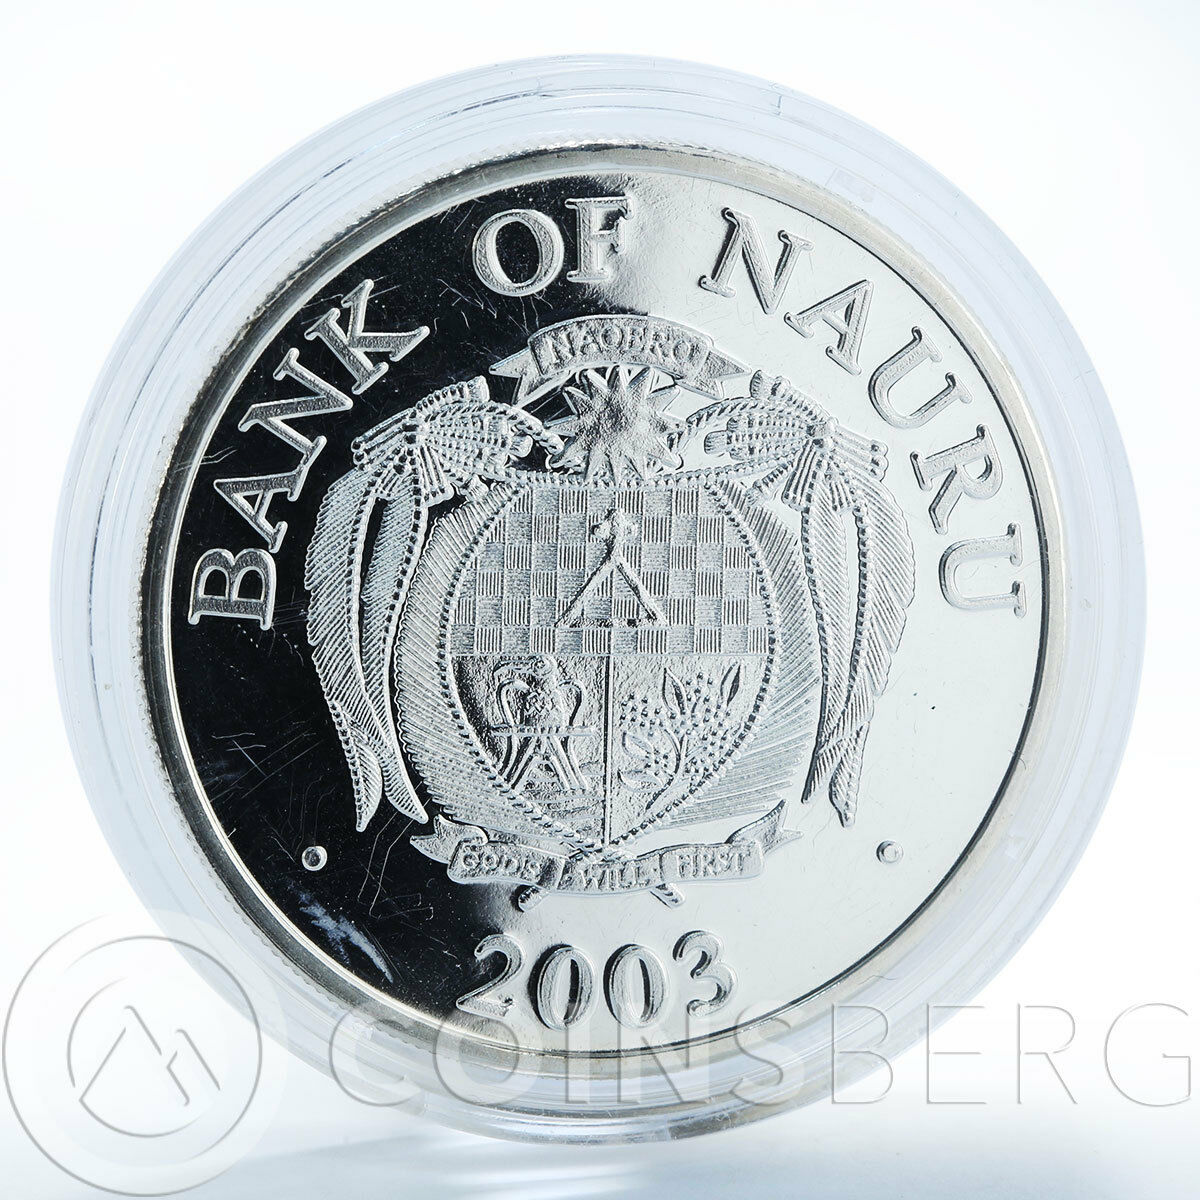 Nauru 10 dollars 1st Anniversary of the Euro German Mark hologram silver 2003